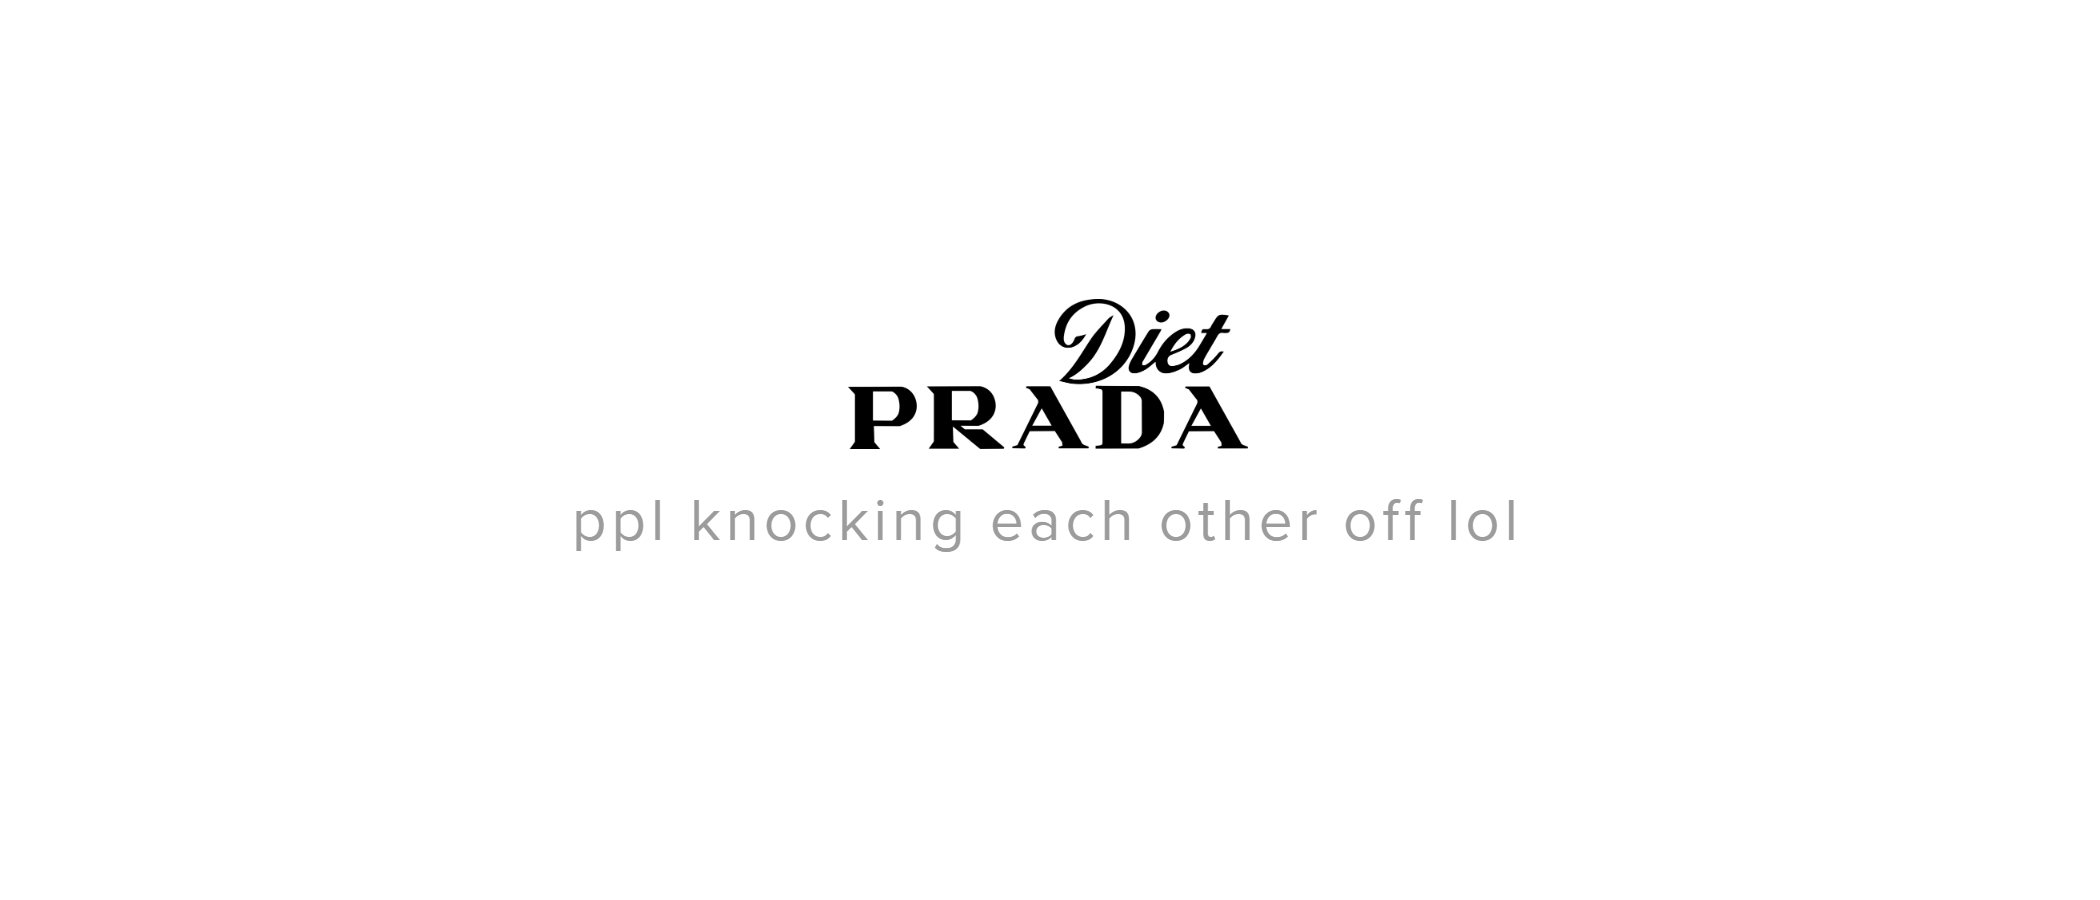 Diet Prada, la denuncia al plagio en la era de Instagram